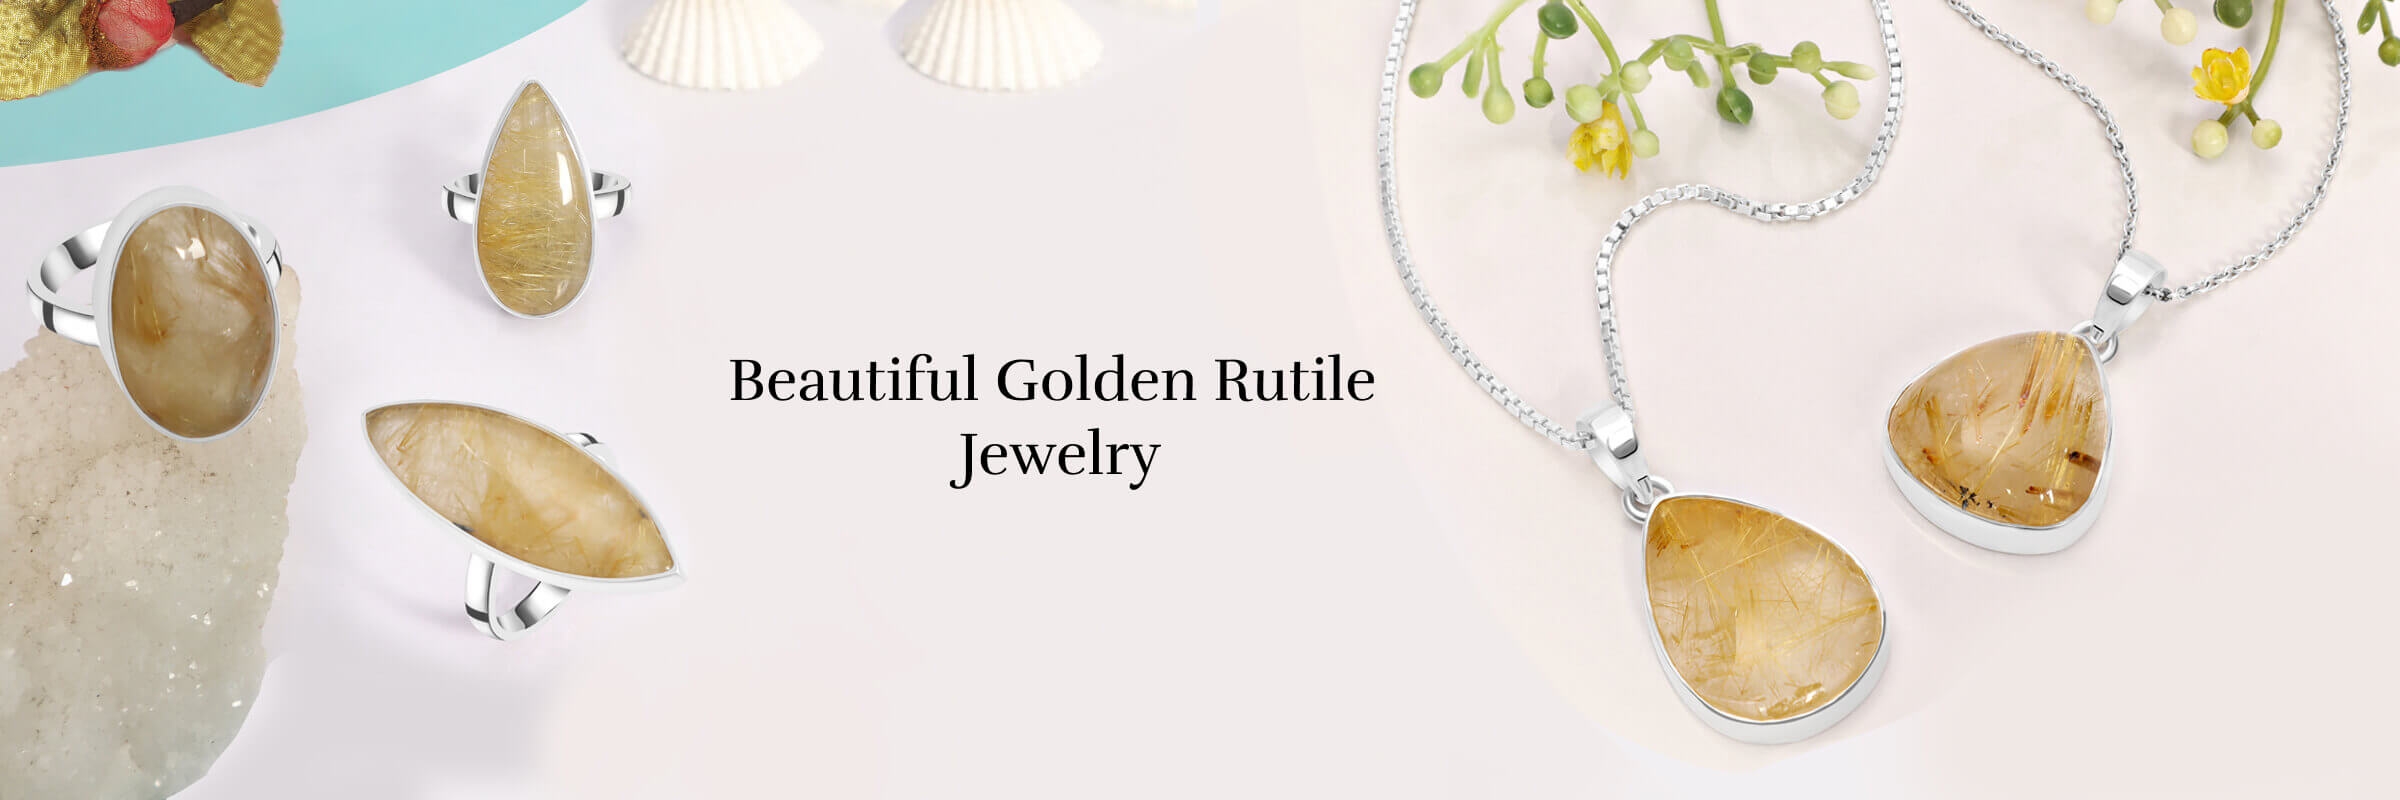 Golden Rutile Jewelry